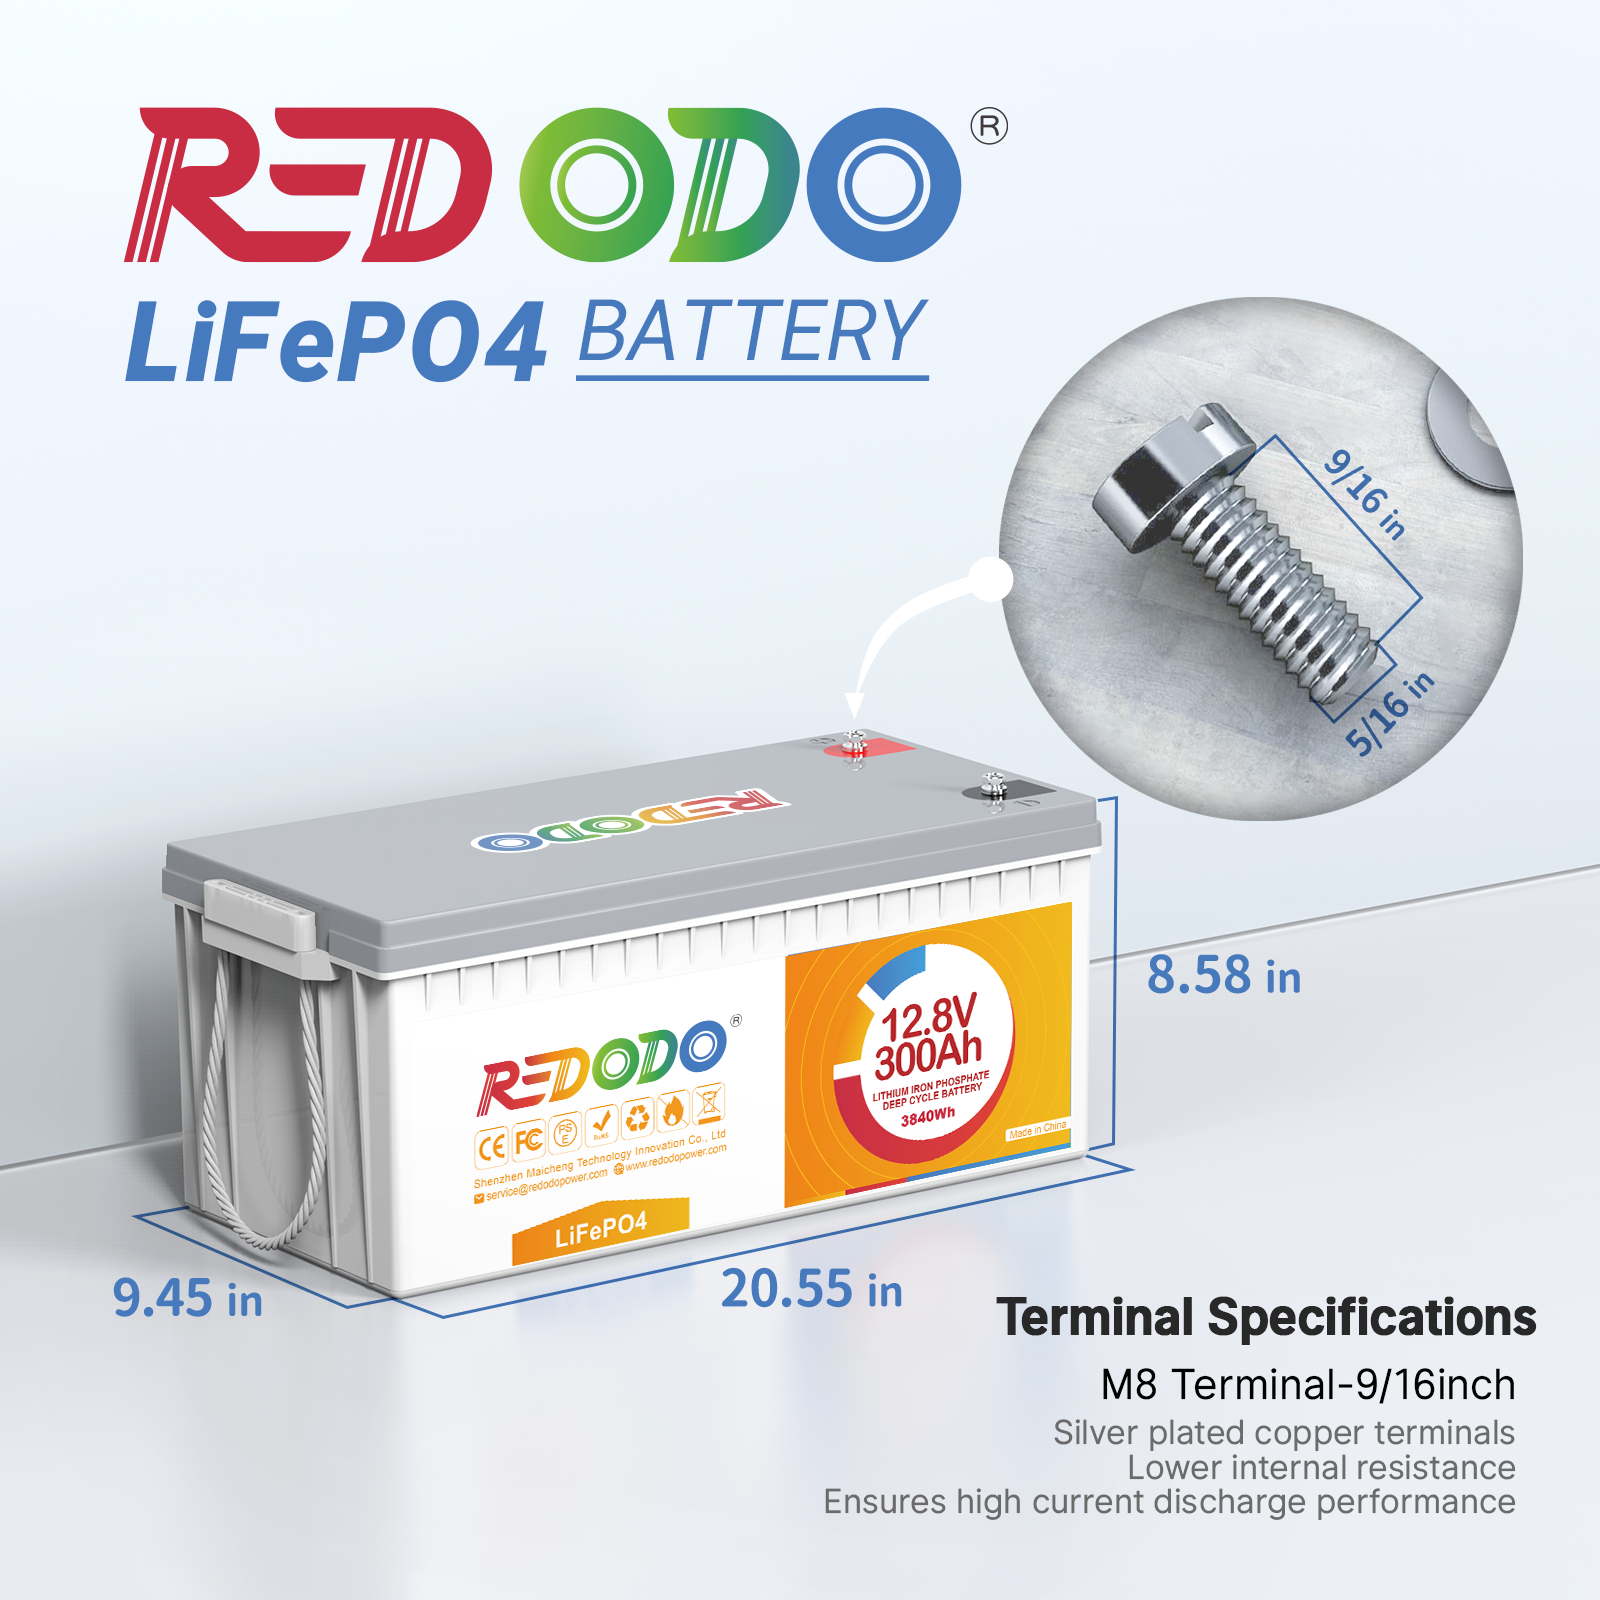 Redodo 12V 300Ah LiFePO4 Battery | 3.84kWh & 2.56kW Redodo